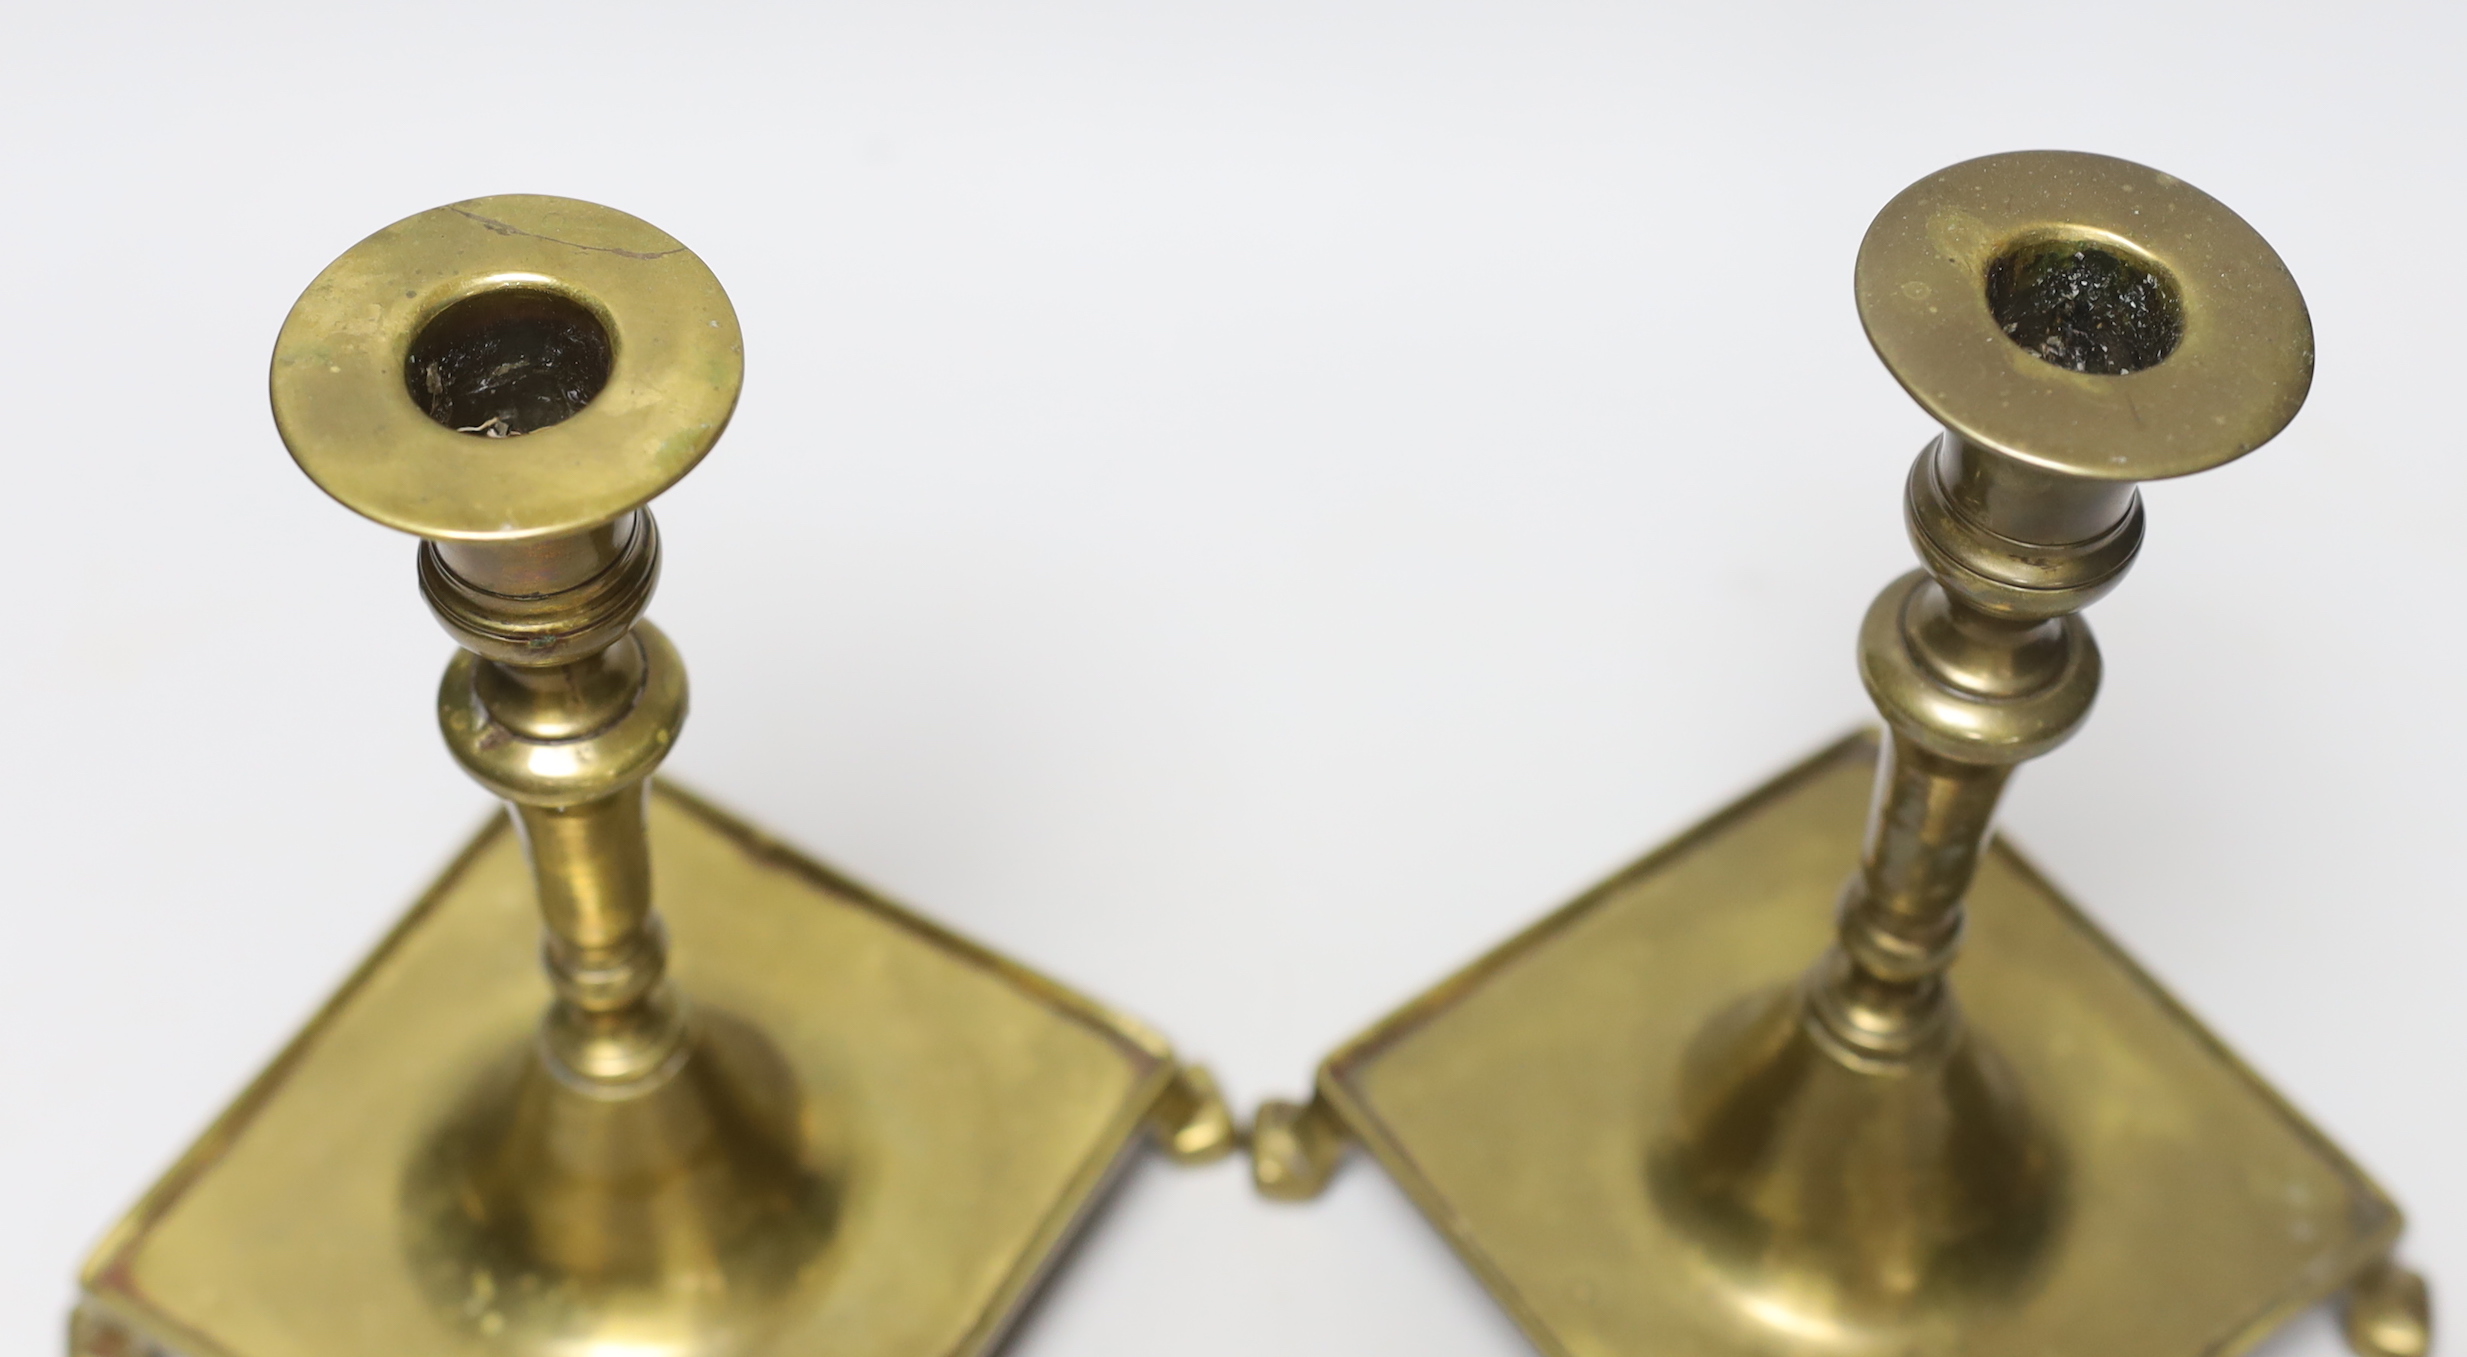 A pair of Spanish brass 17th/18th century candlesticks, 19cm